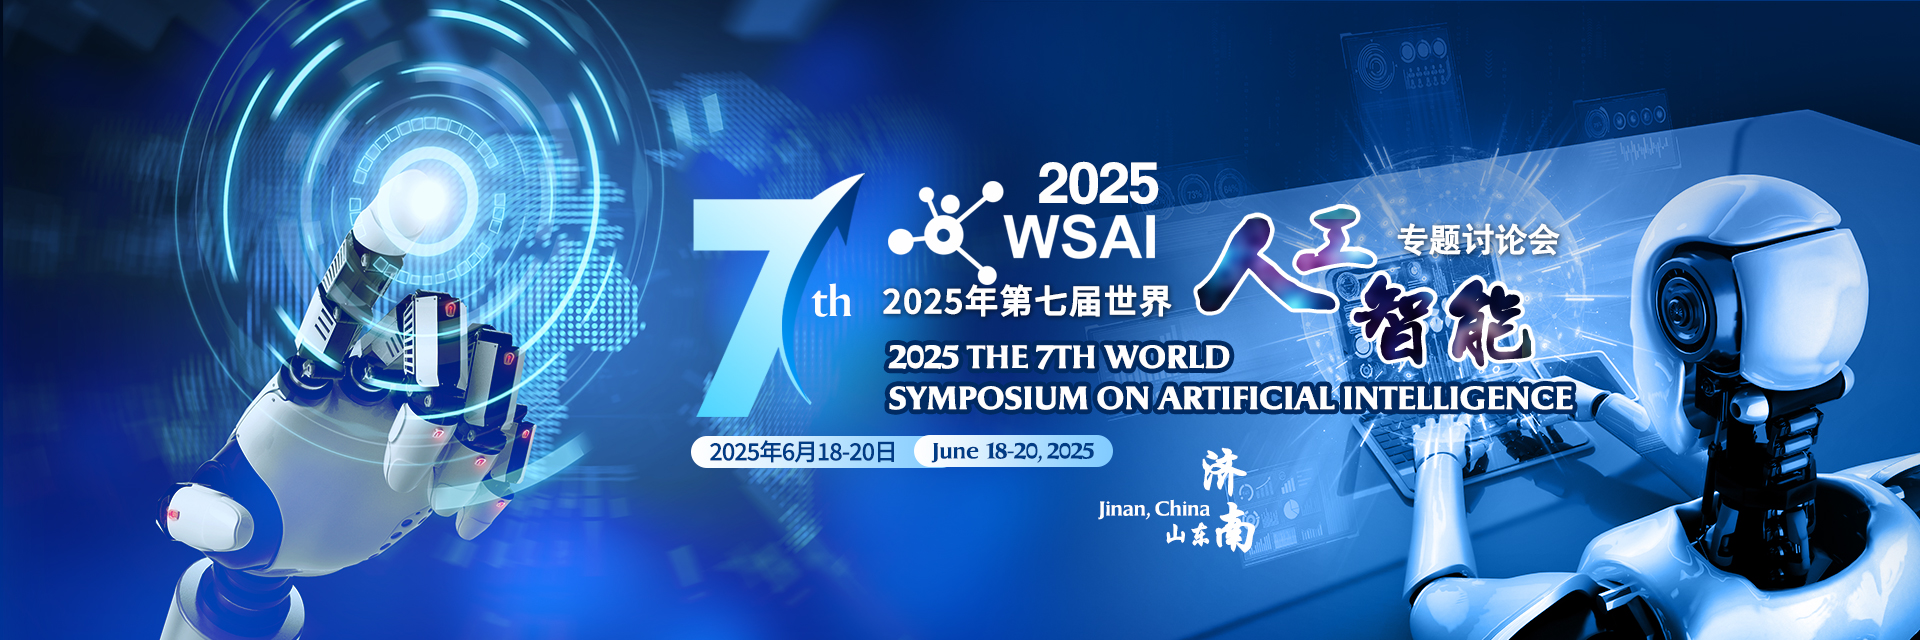 WSAI 2024 人工智能专题讨论会